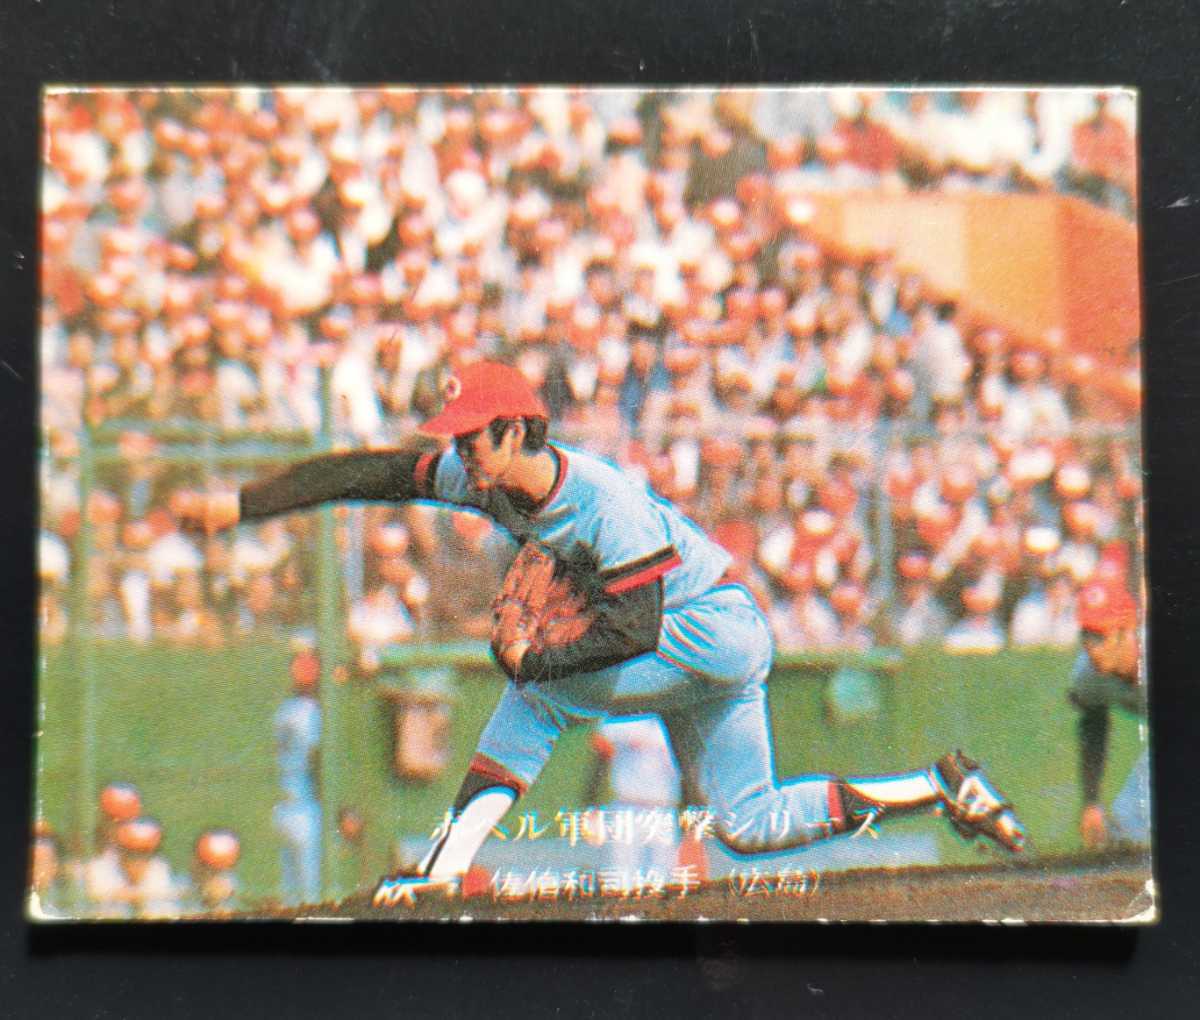  Calbee 1975 Professional Baseball card No.318 red hell army ... series .. peace .( Hiroshima )